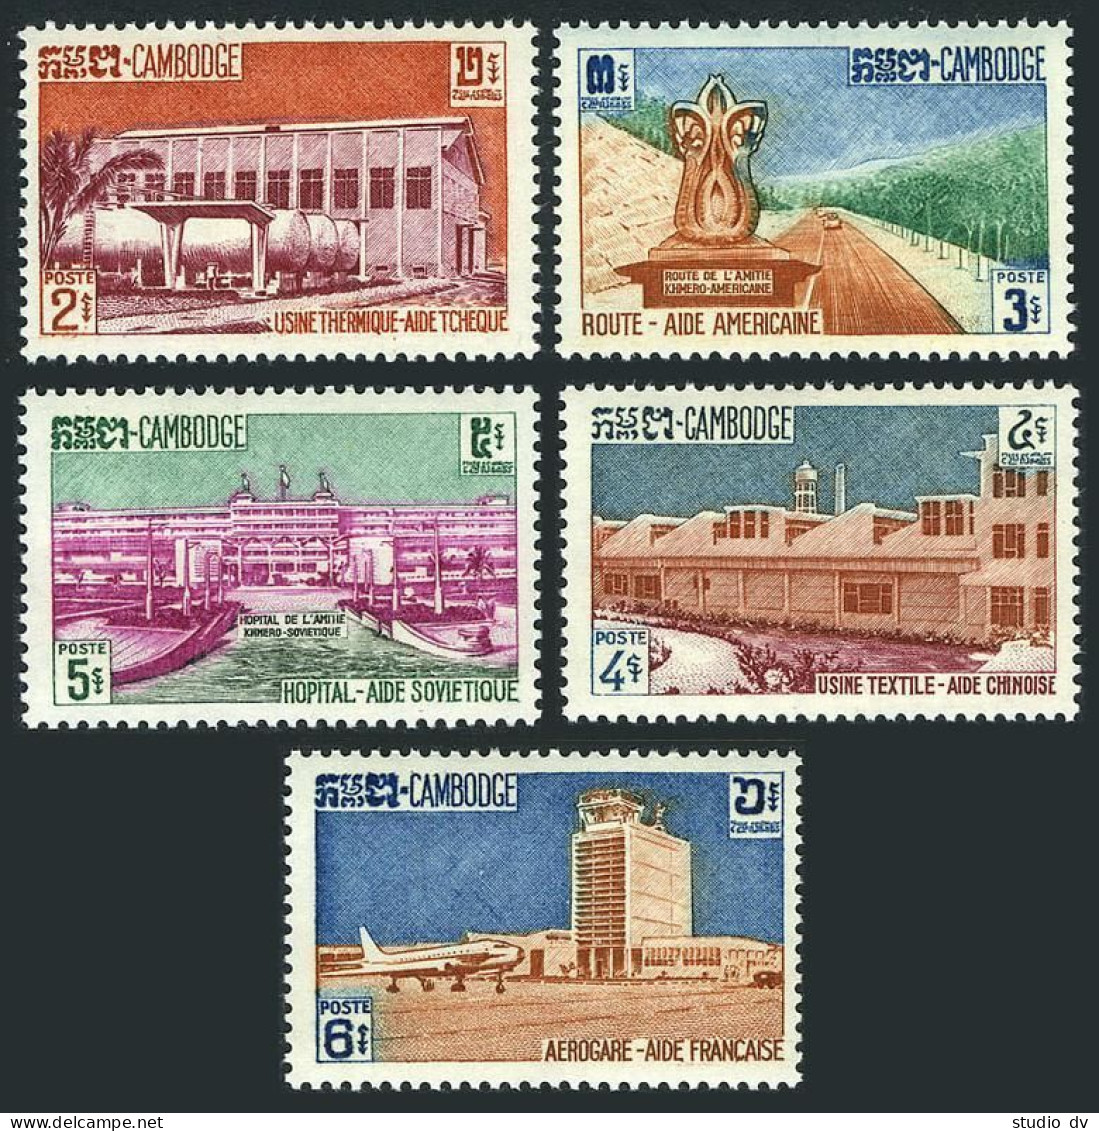 Cambodia 101-105, Hinged. Mi 132-136. Foreign Aid 1961. Power Station, Hospital, - Cambodge